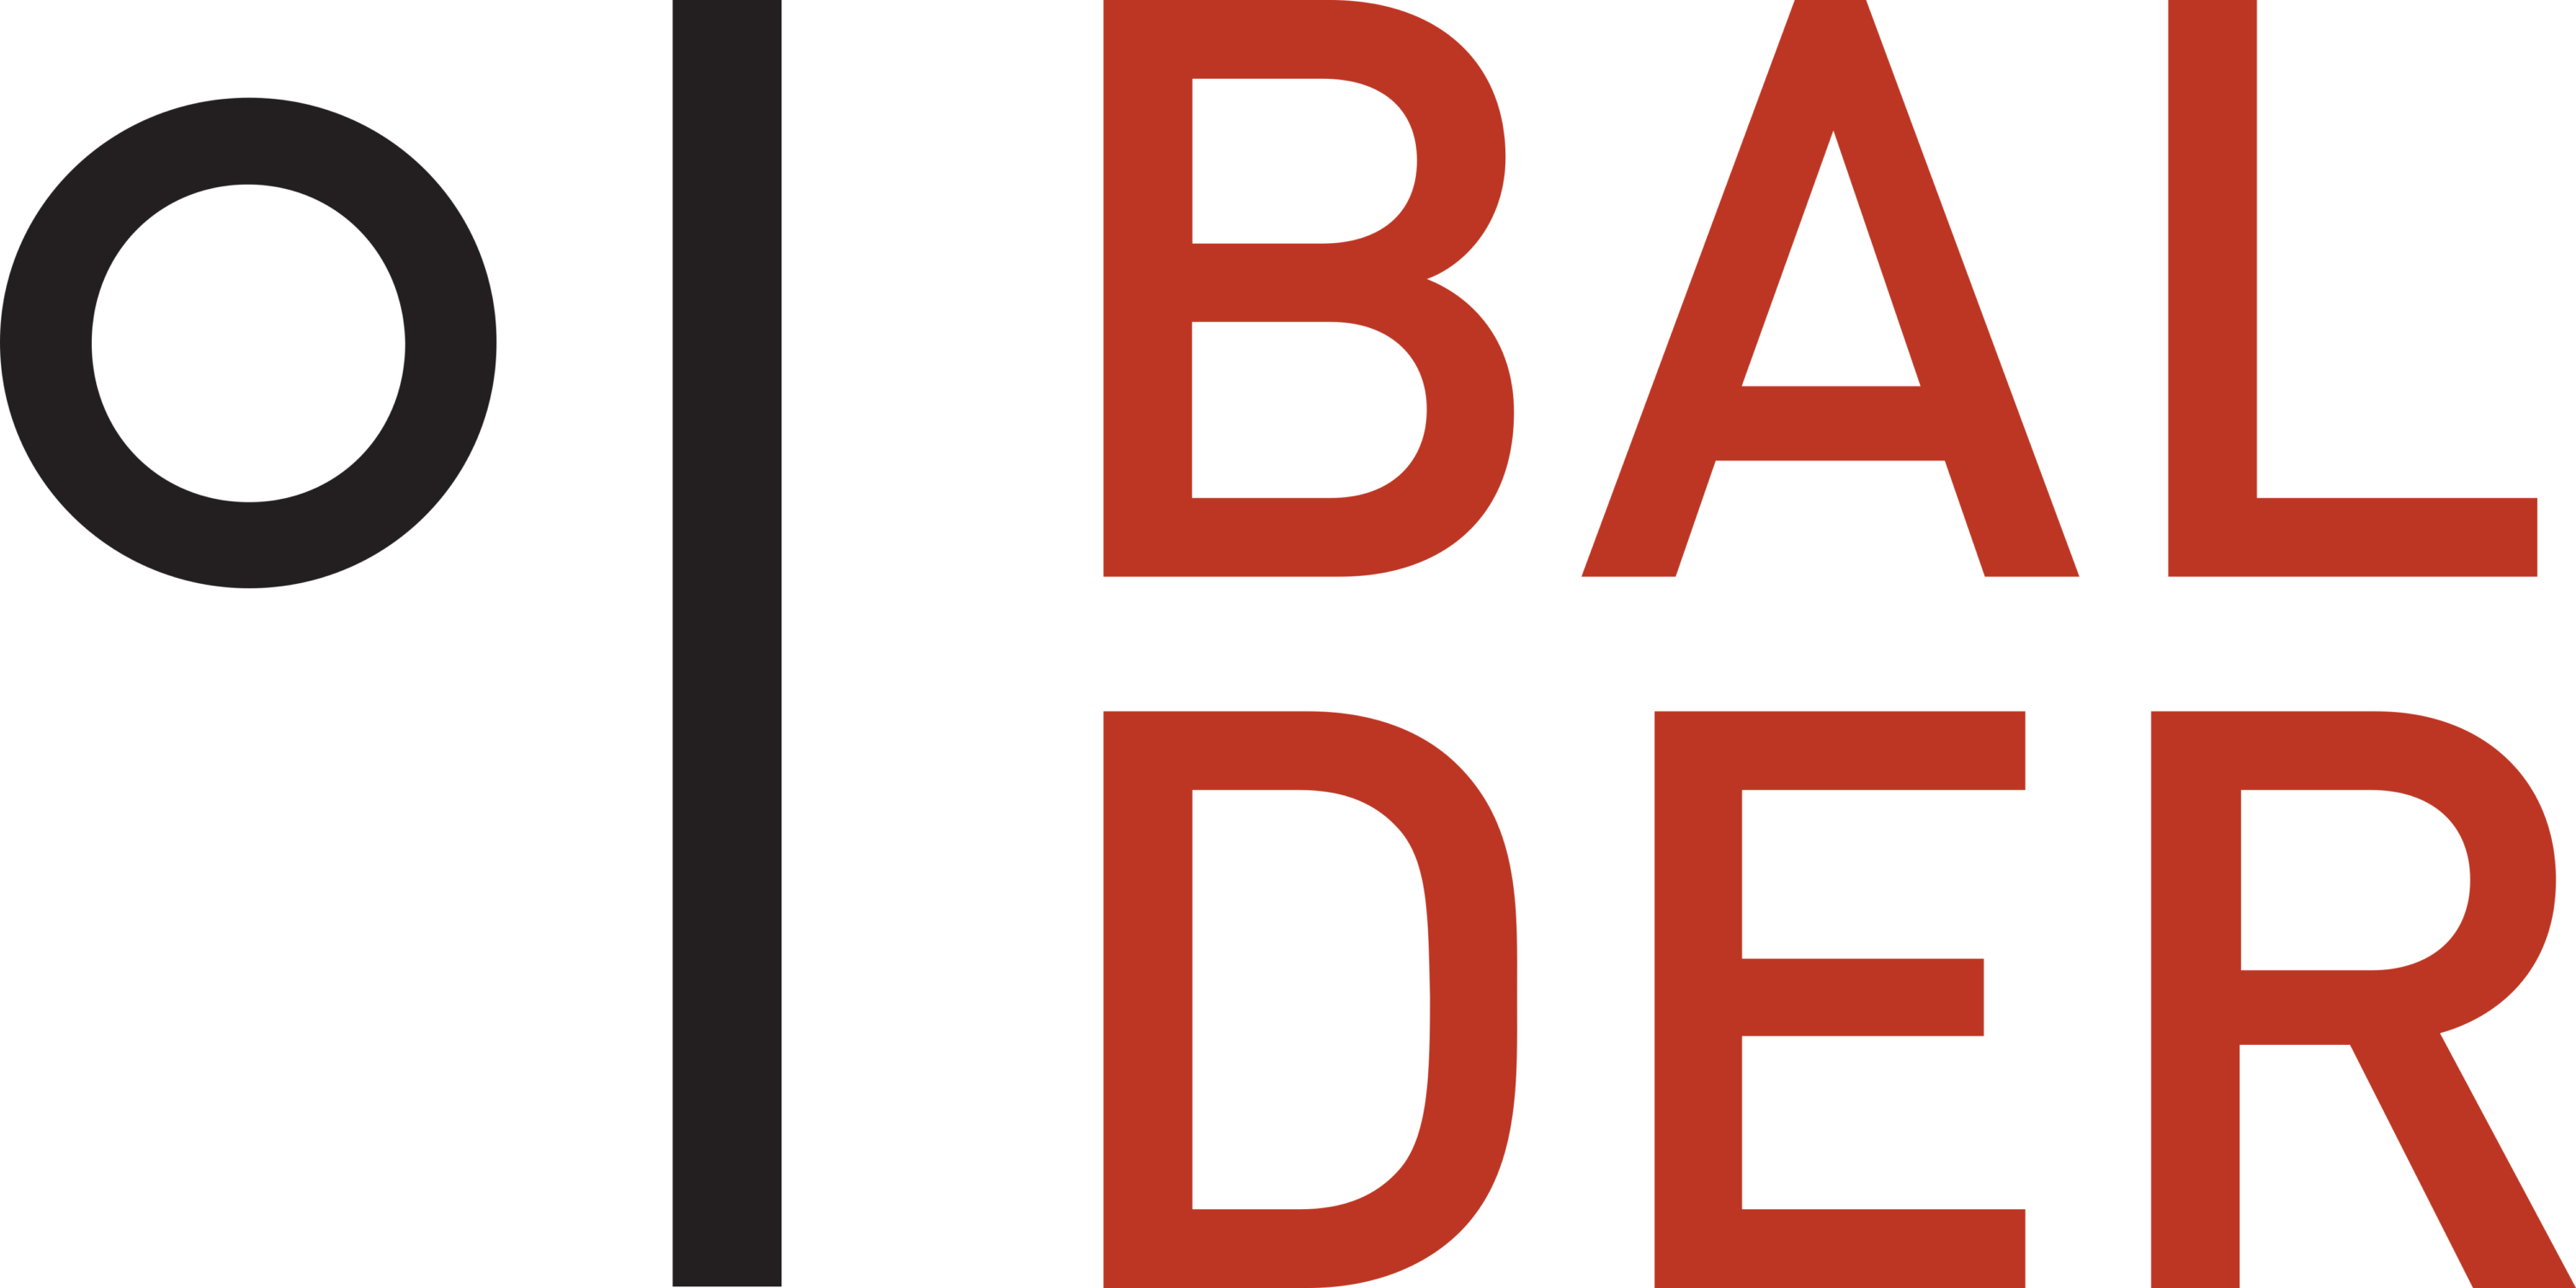 Balder Logo